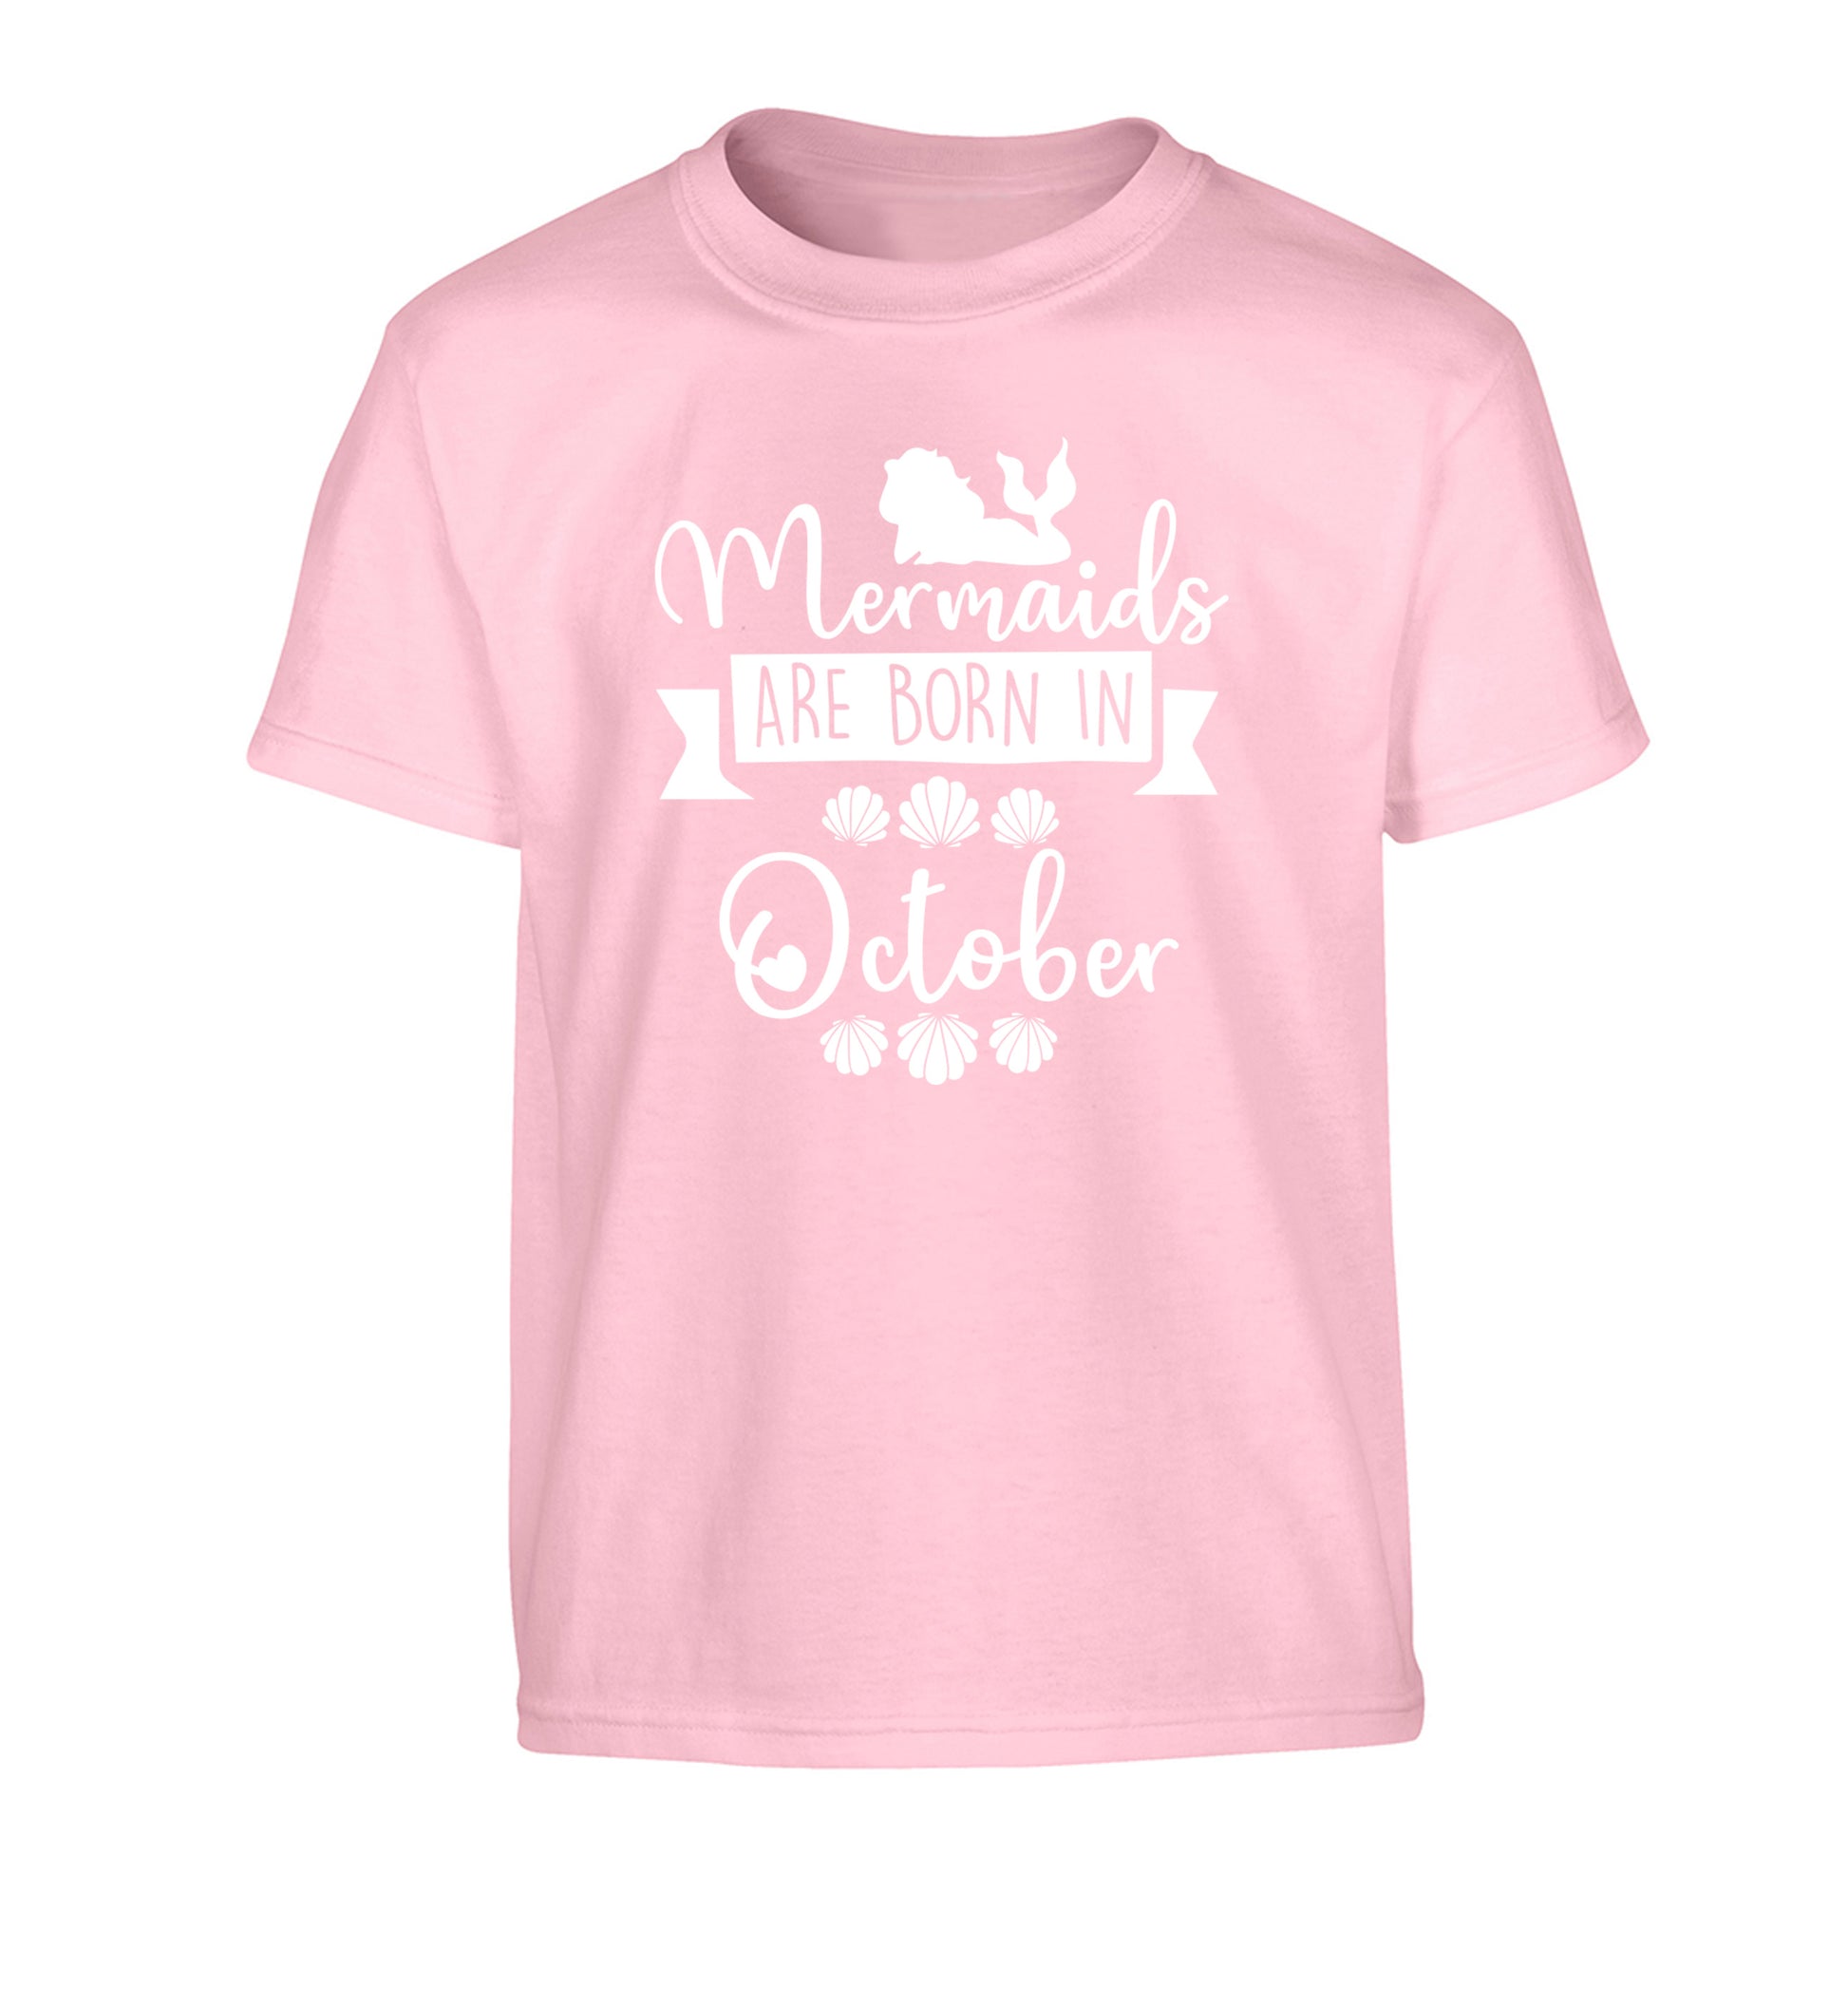 Mermaids are born in October Children's light pink Tshirt 12-13 Years